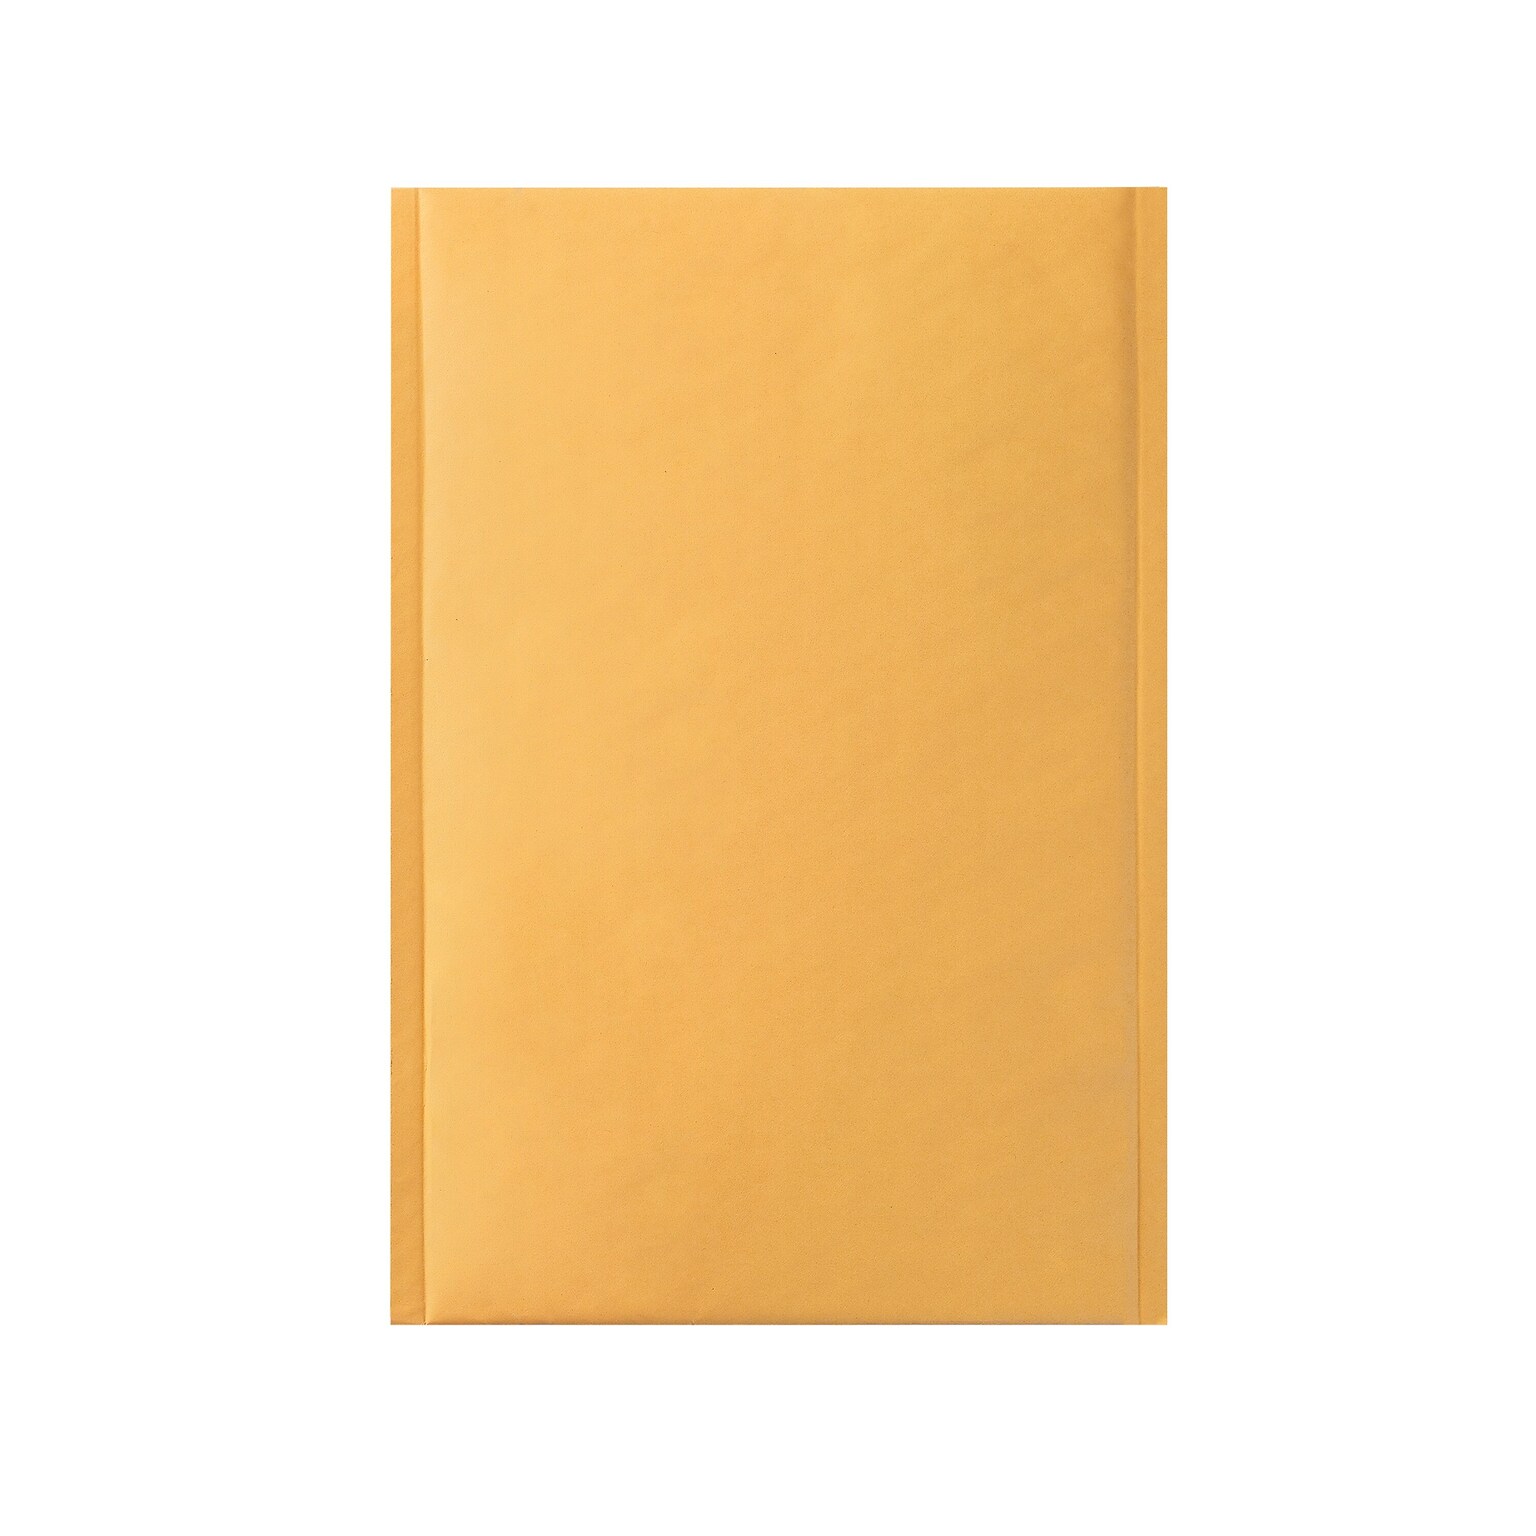 Coastwide Professional™ 5.75 x 9 Self-Sealing Bubble Mailer, #00, Kraft, 250/Carton (CW56652B)